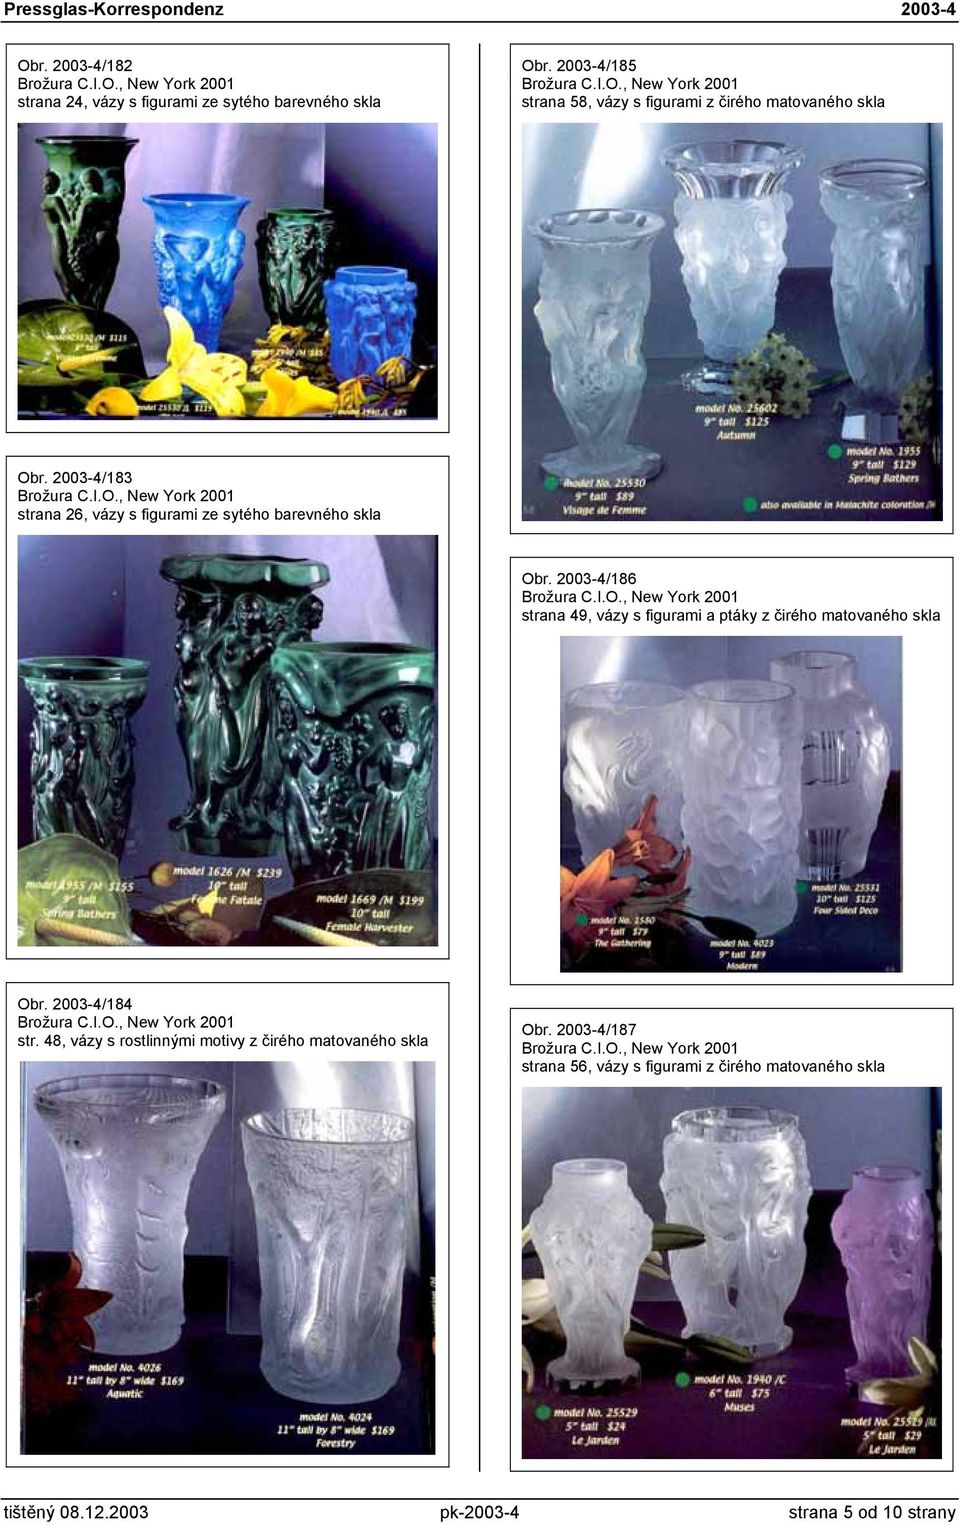 2003-4/183 strana 26, vázy s figurami ze sytého barevného skla Obr.